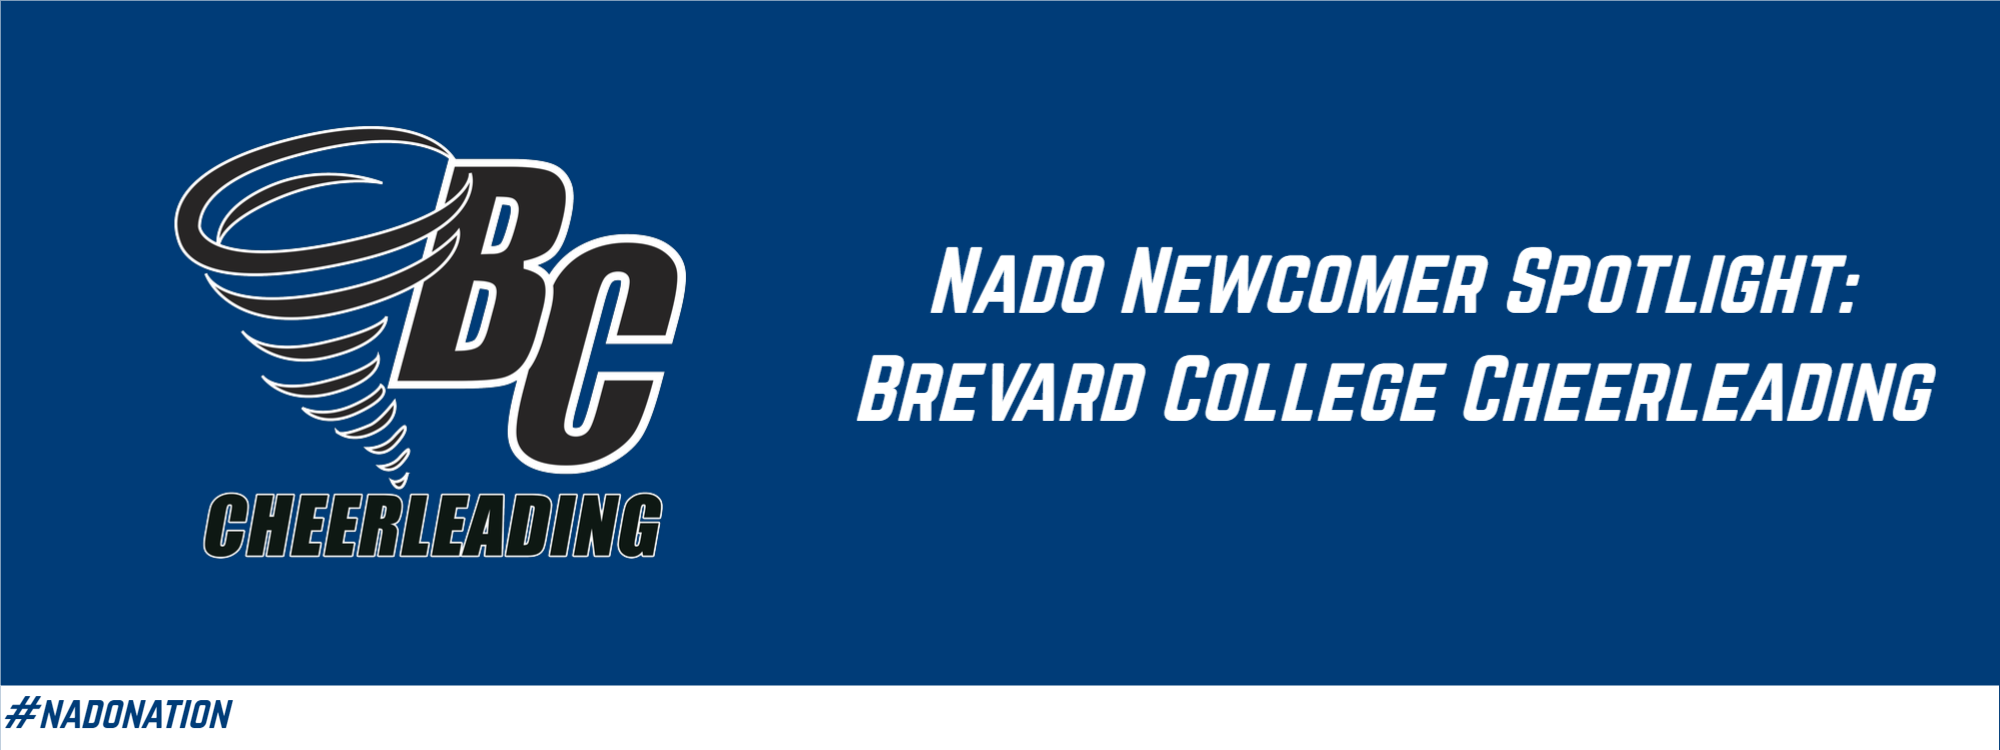 Nado Newcomer Spotlight: Cheerleading Welcomes 5 to 2020-21 Squad